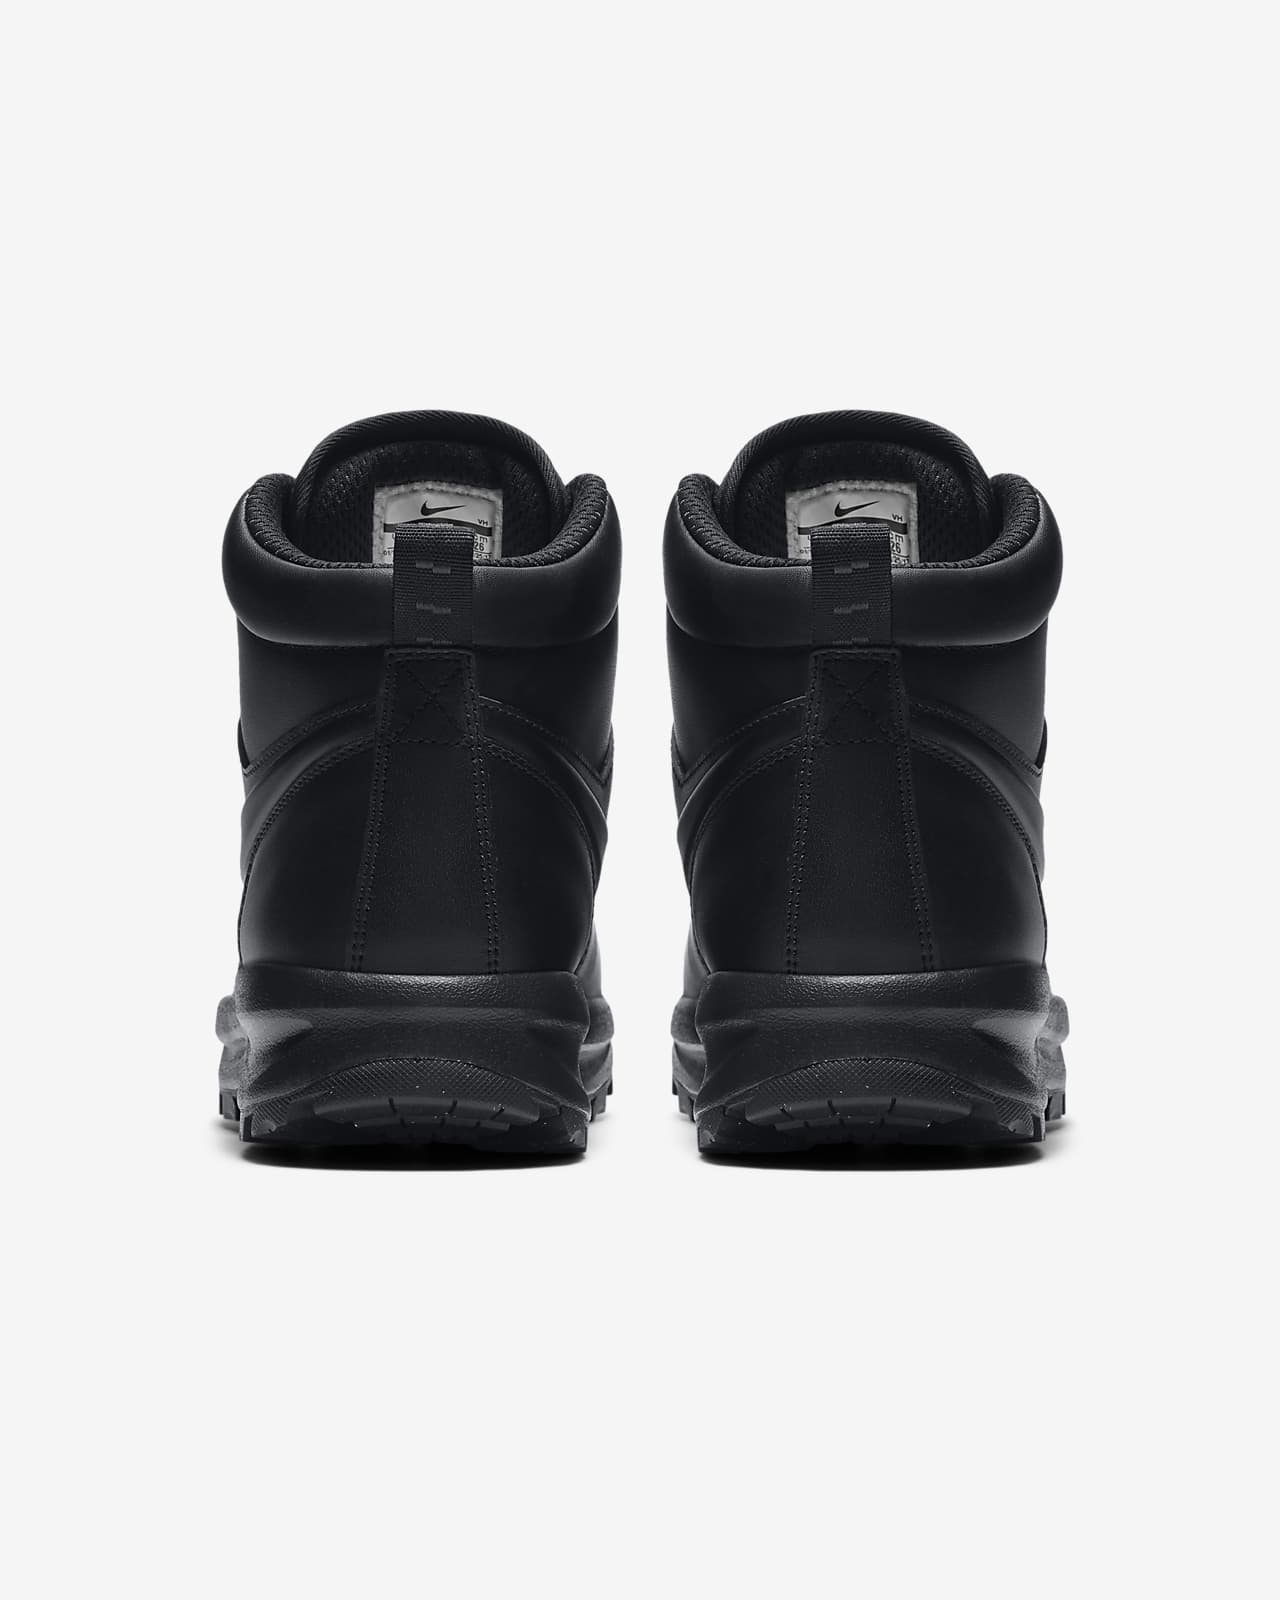 Nike Manoa Leather Botas - ES